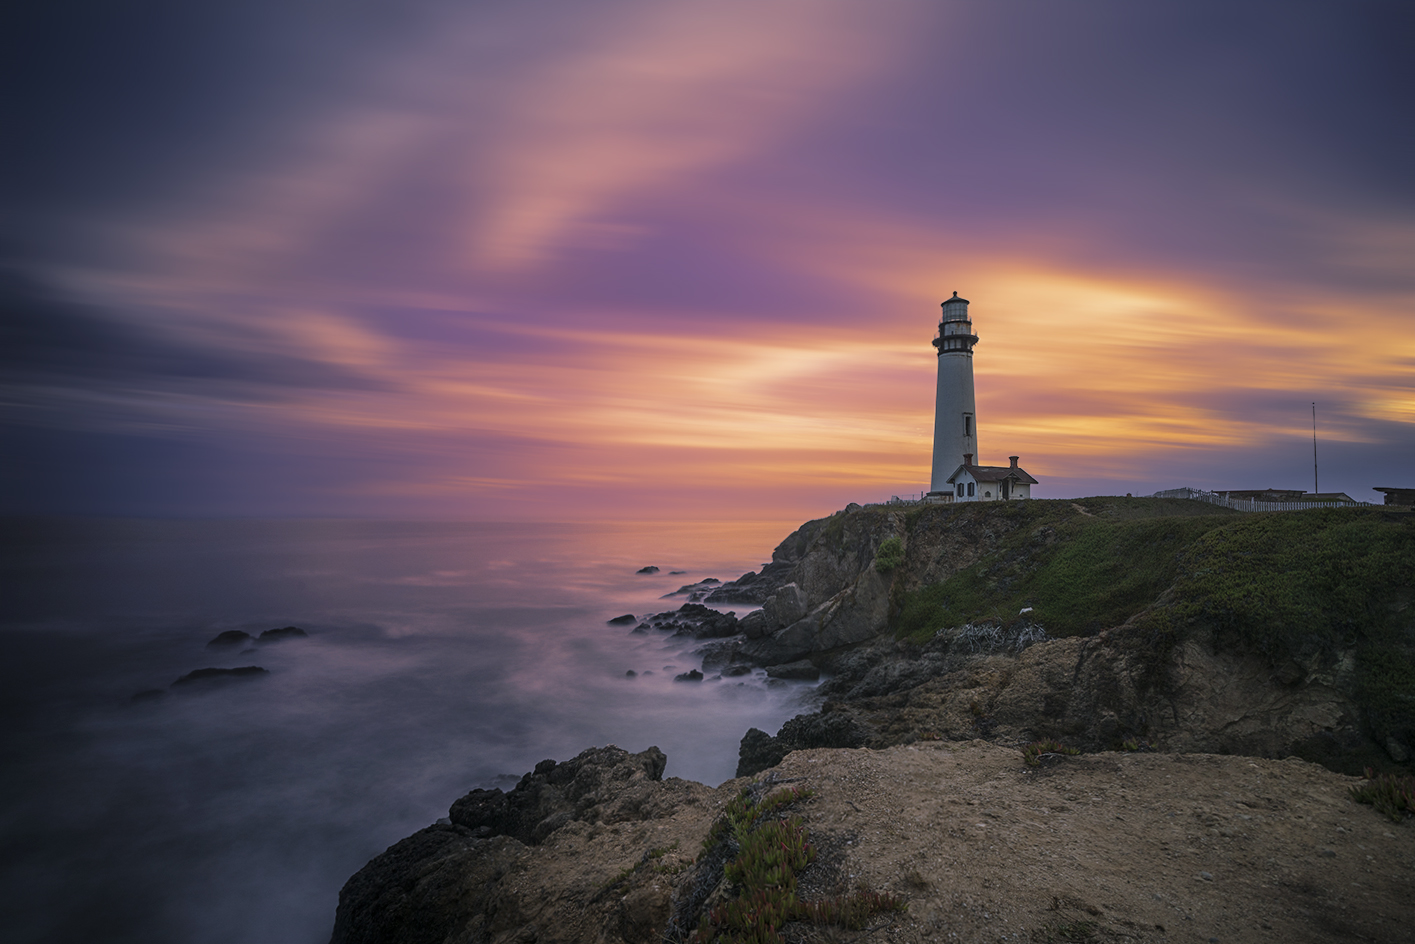 Beautiful sunset overlooking Pigeon Point Lighthouse on the coast of California